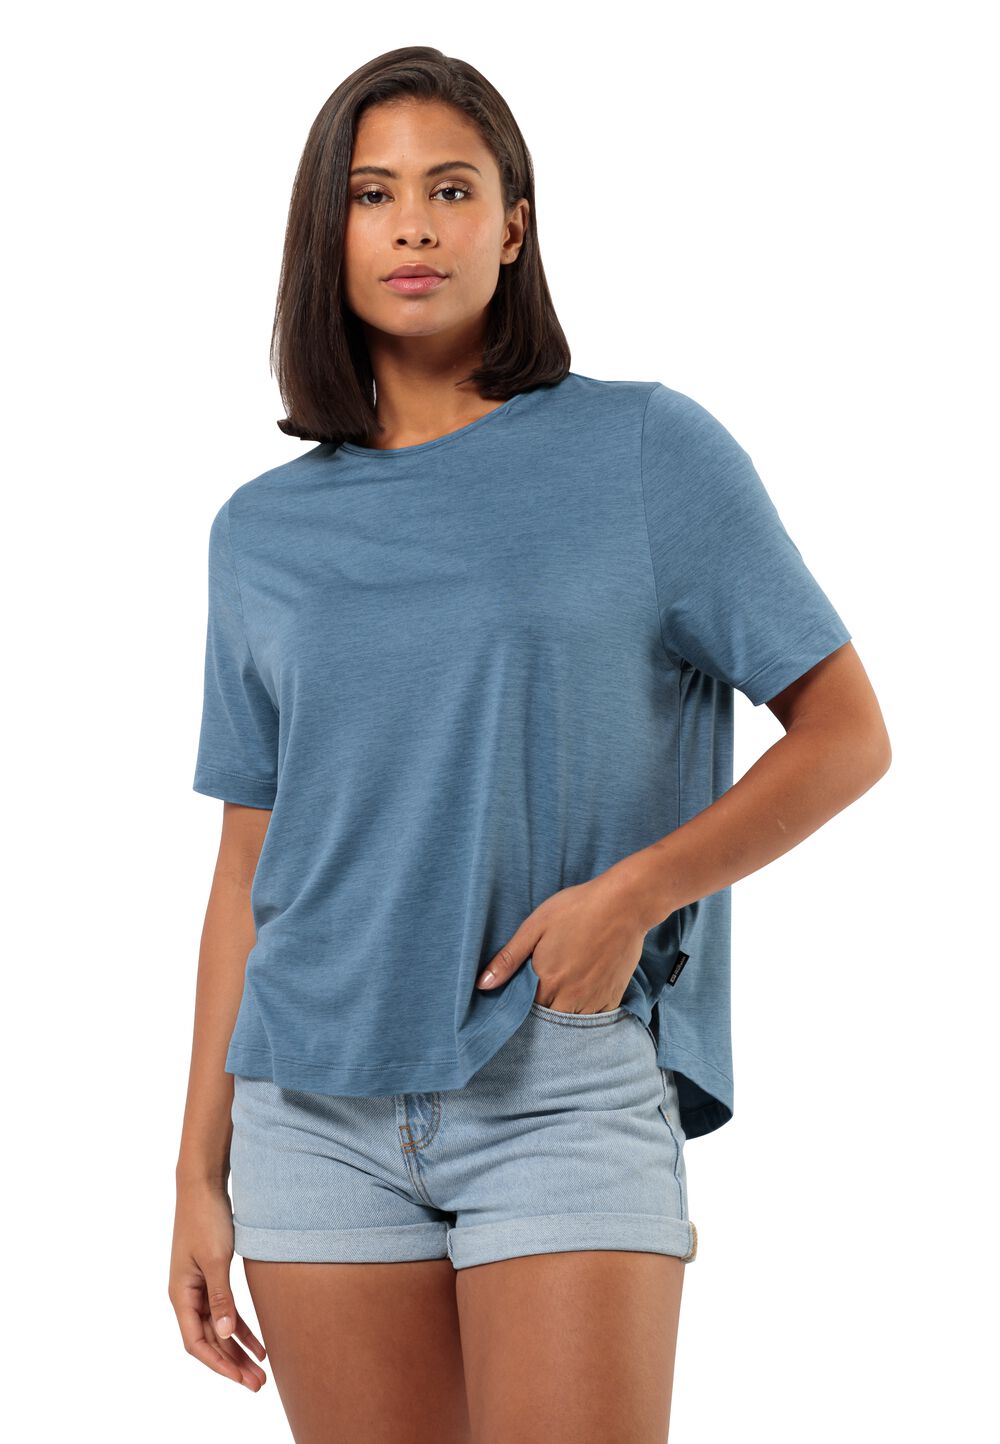 Jack Wolfskin Travel T-Shirt Women Functioneel shirt Dames XS elemental blue elemental blue